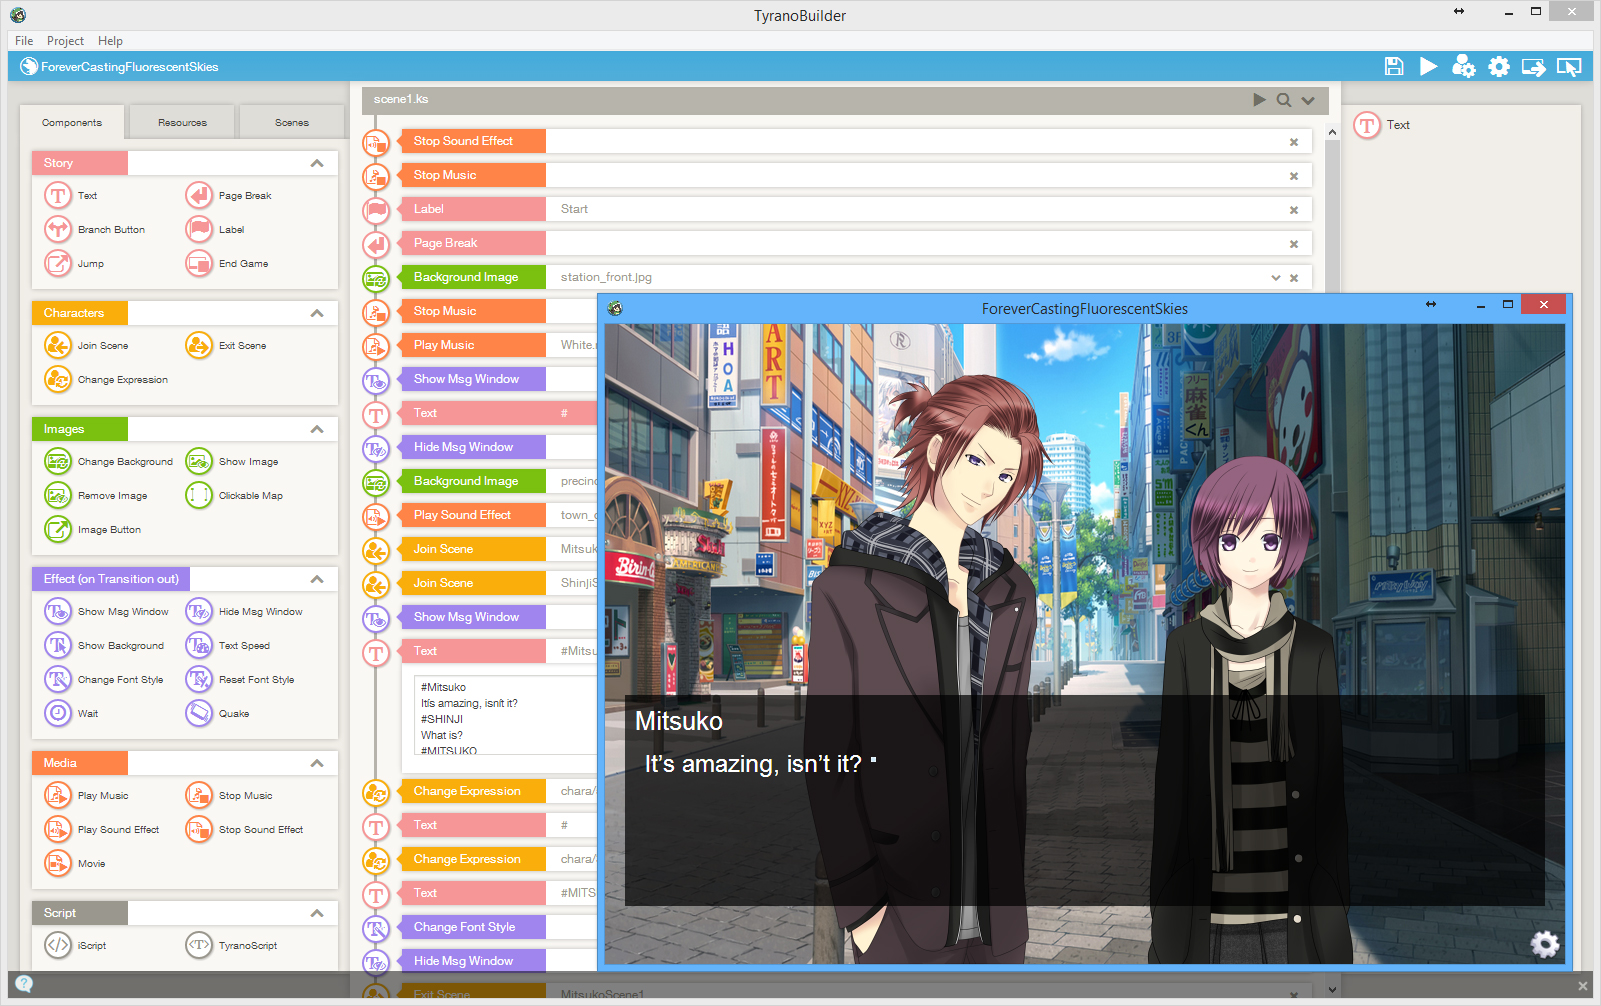 TyranoBuilder Visual Novel Studio screenshot